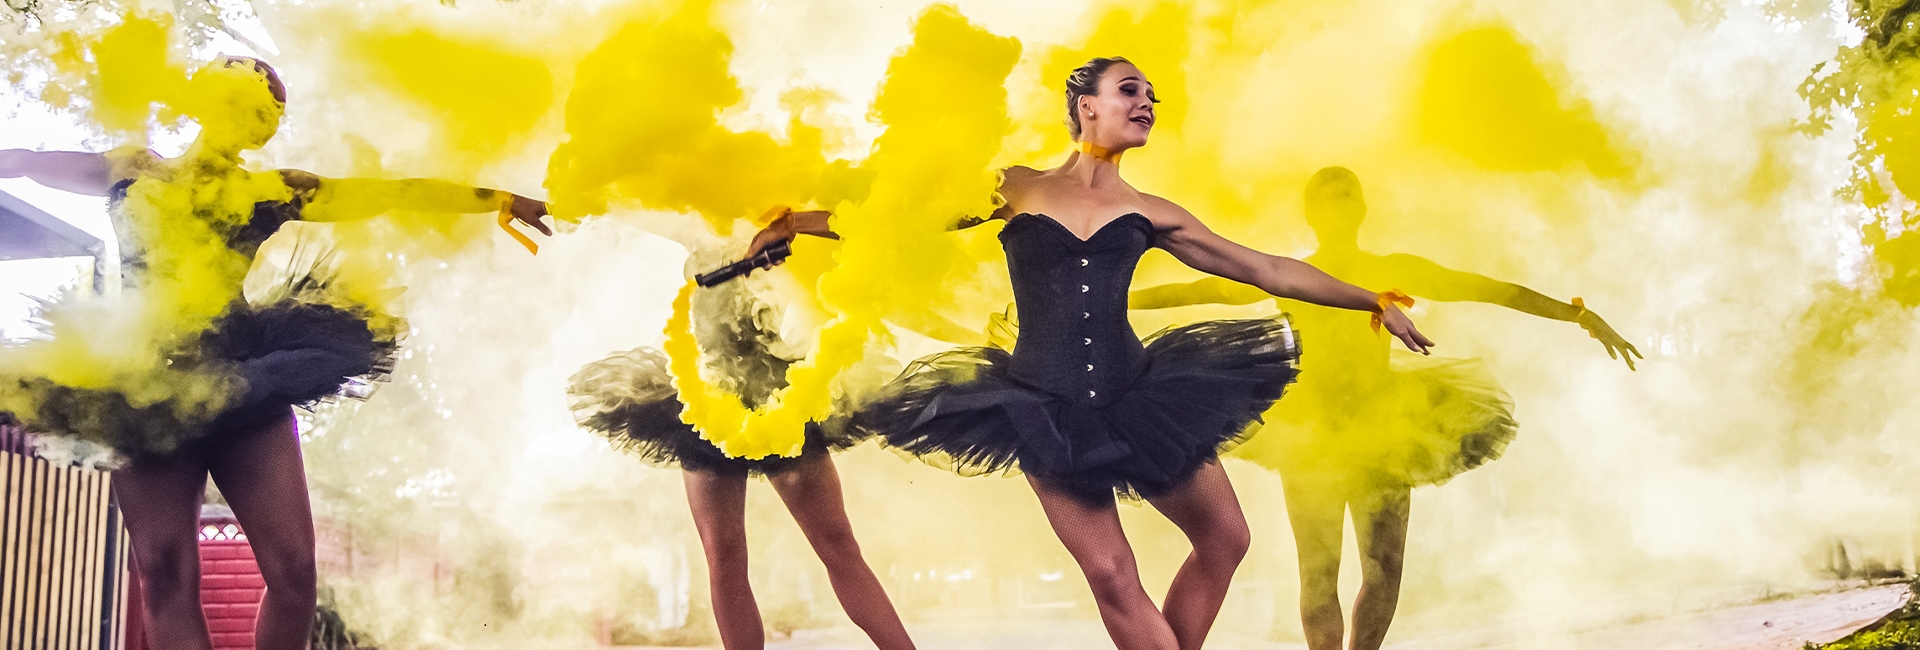 Ballerinas dressed in black dancing in yellow smoke